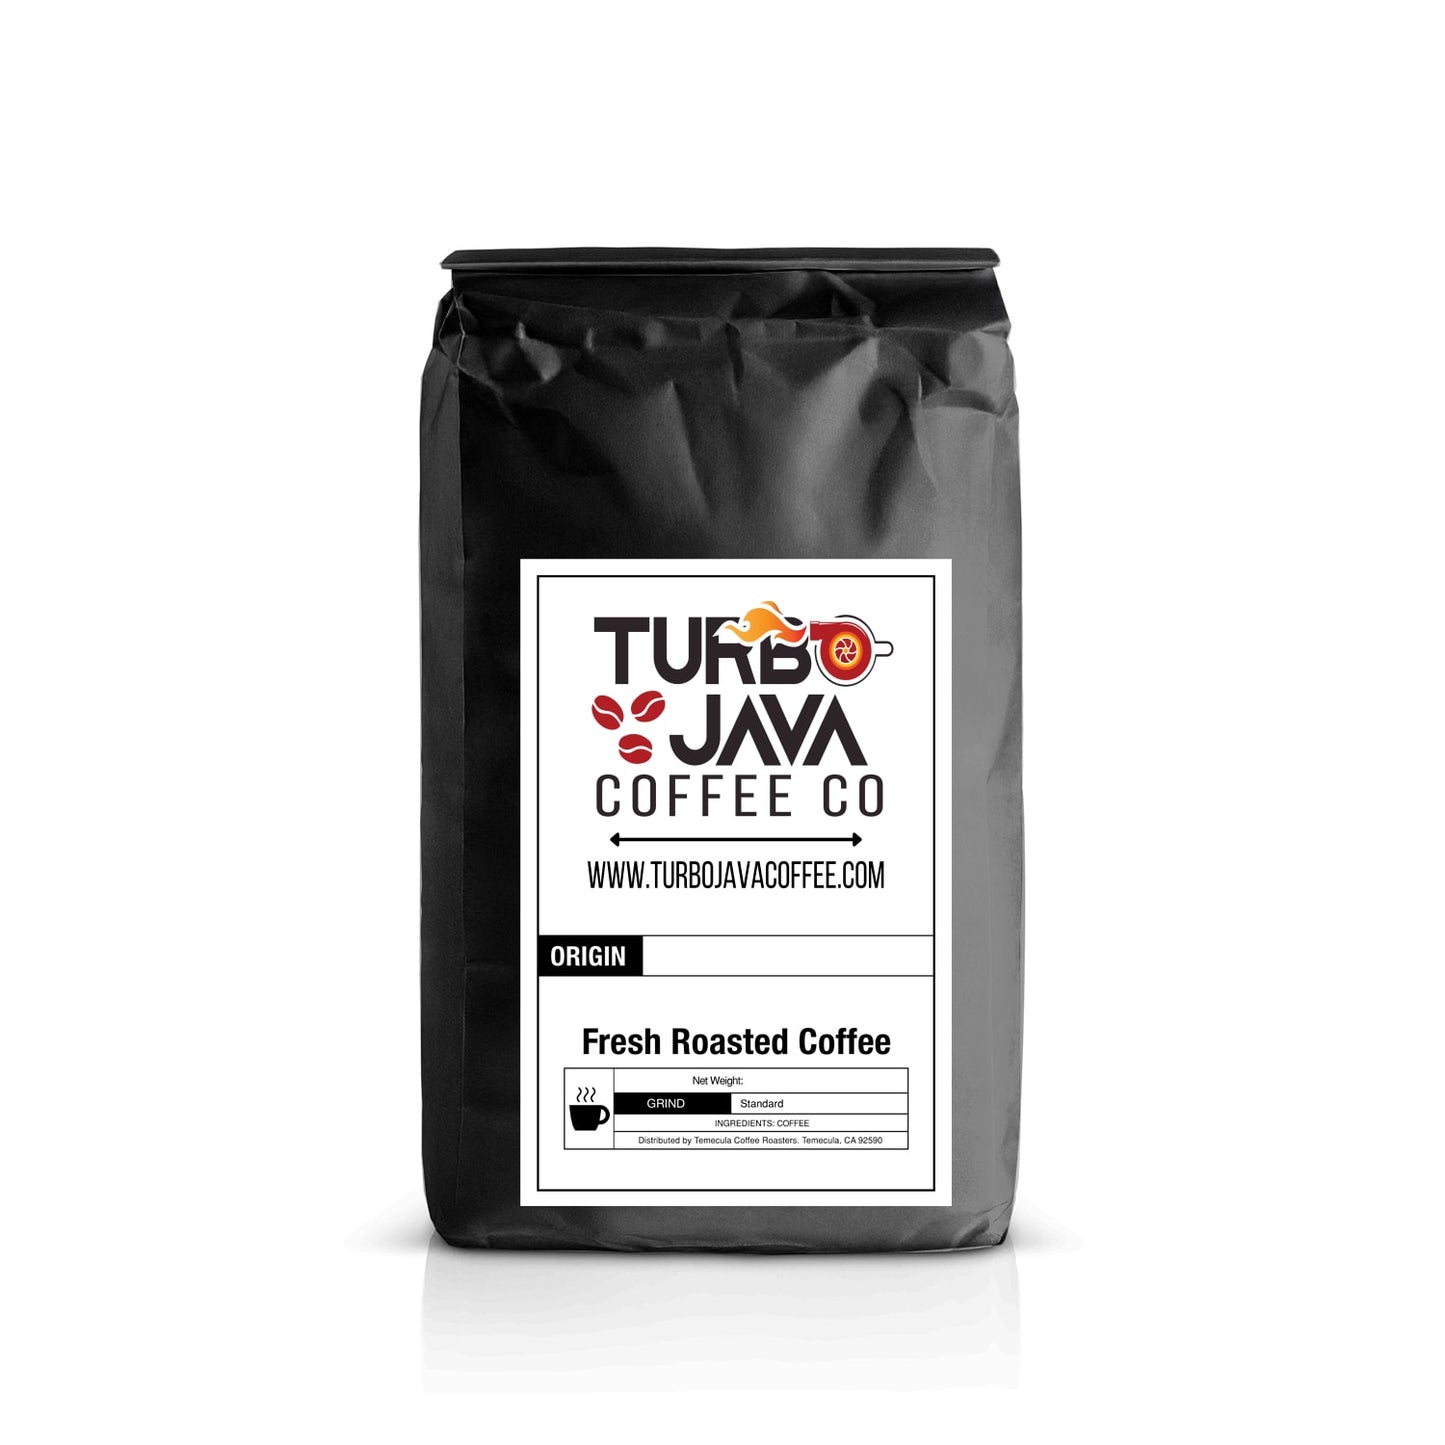 Turbo Java Coffee Co. Cowboy Blend Coffee 12 oz / Standard,12 oz / Coarse,12 oz / Espresso,12 oz / Whole Bean,1 lb / Standard,1 lb / Coarse,1 lb / Espresso,1 lb / Whole Bean,2 lb / Standard,2 lb / Coarse,2 lb / Espresso,2 lb / Whole Bean,5 lb / Standard,5 lb / Coarse,5 lb / Espresso,5 lb / Whole Bean,12 lb / Standard,12 lb / Coarse,12 lb / Espresso,12 lb / Whole Bean,12 Pack / Standard